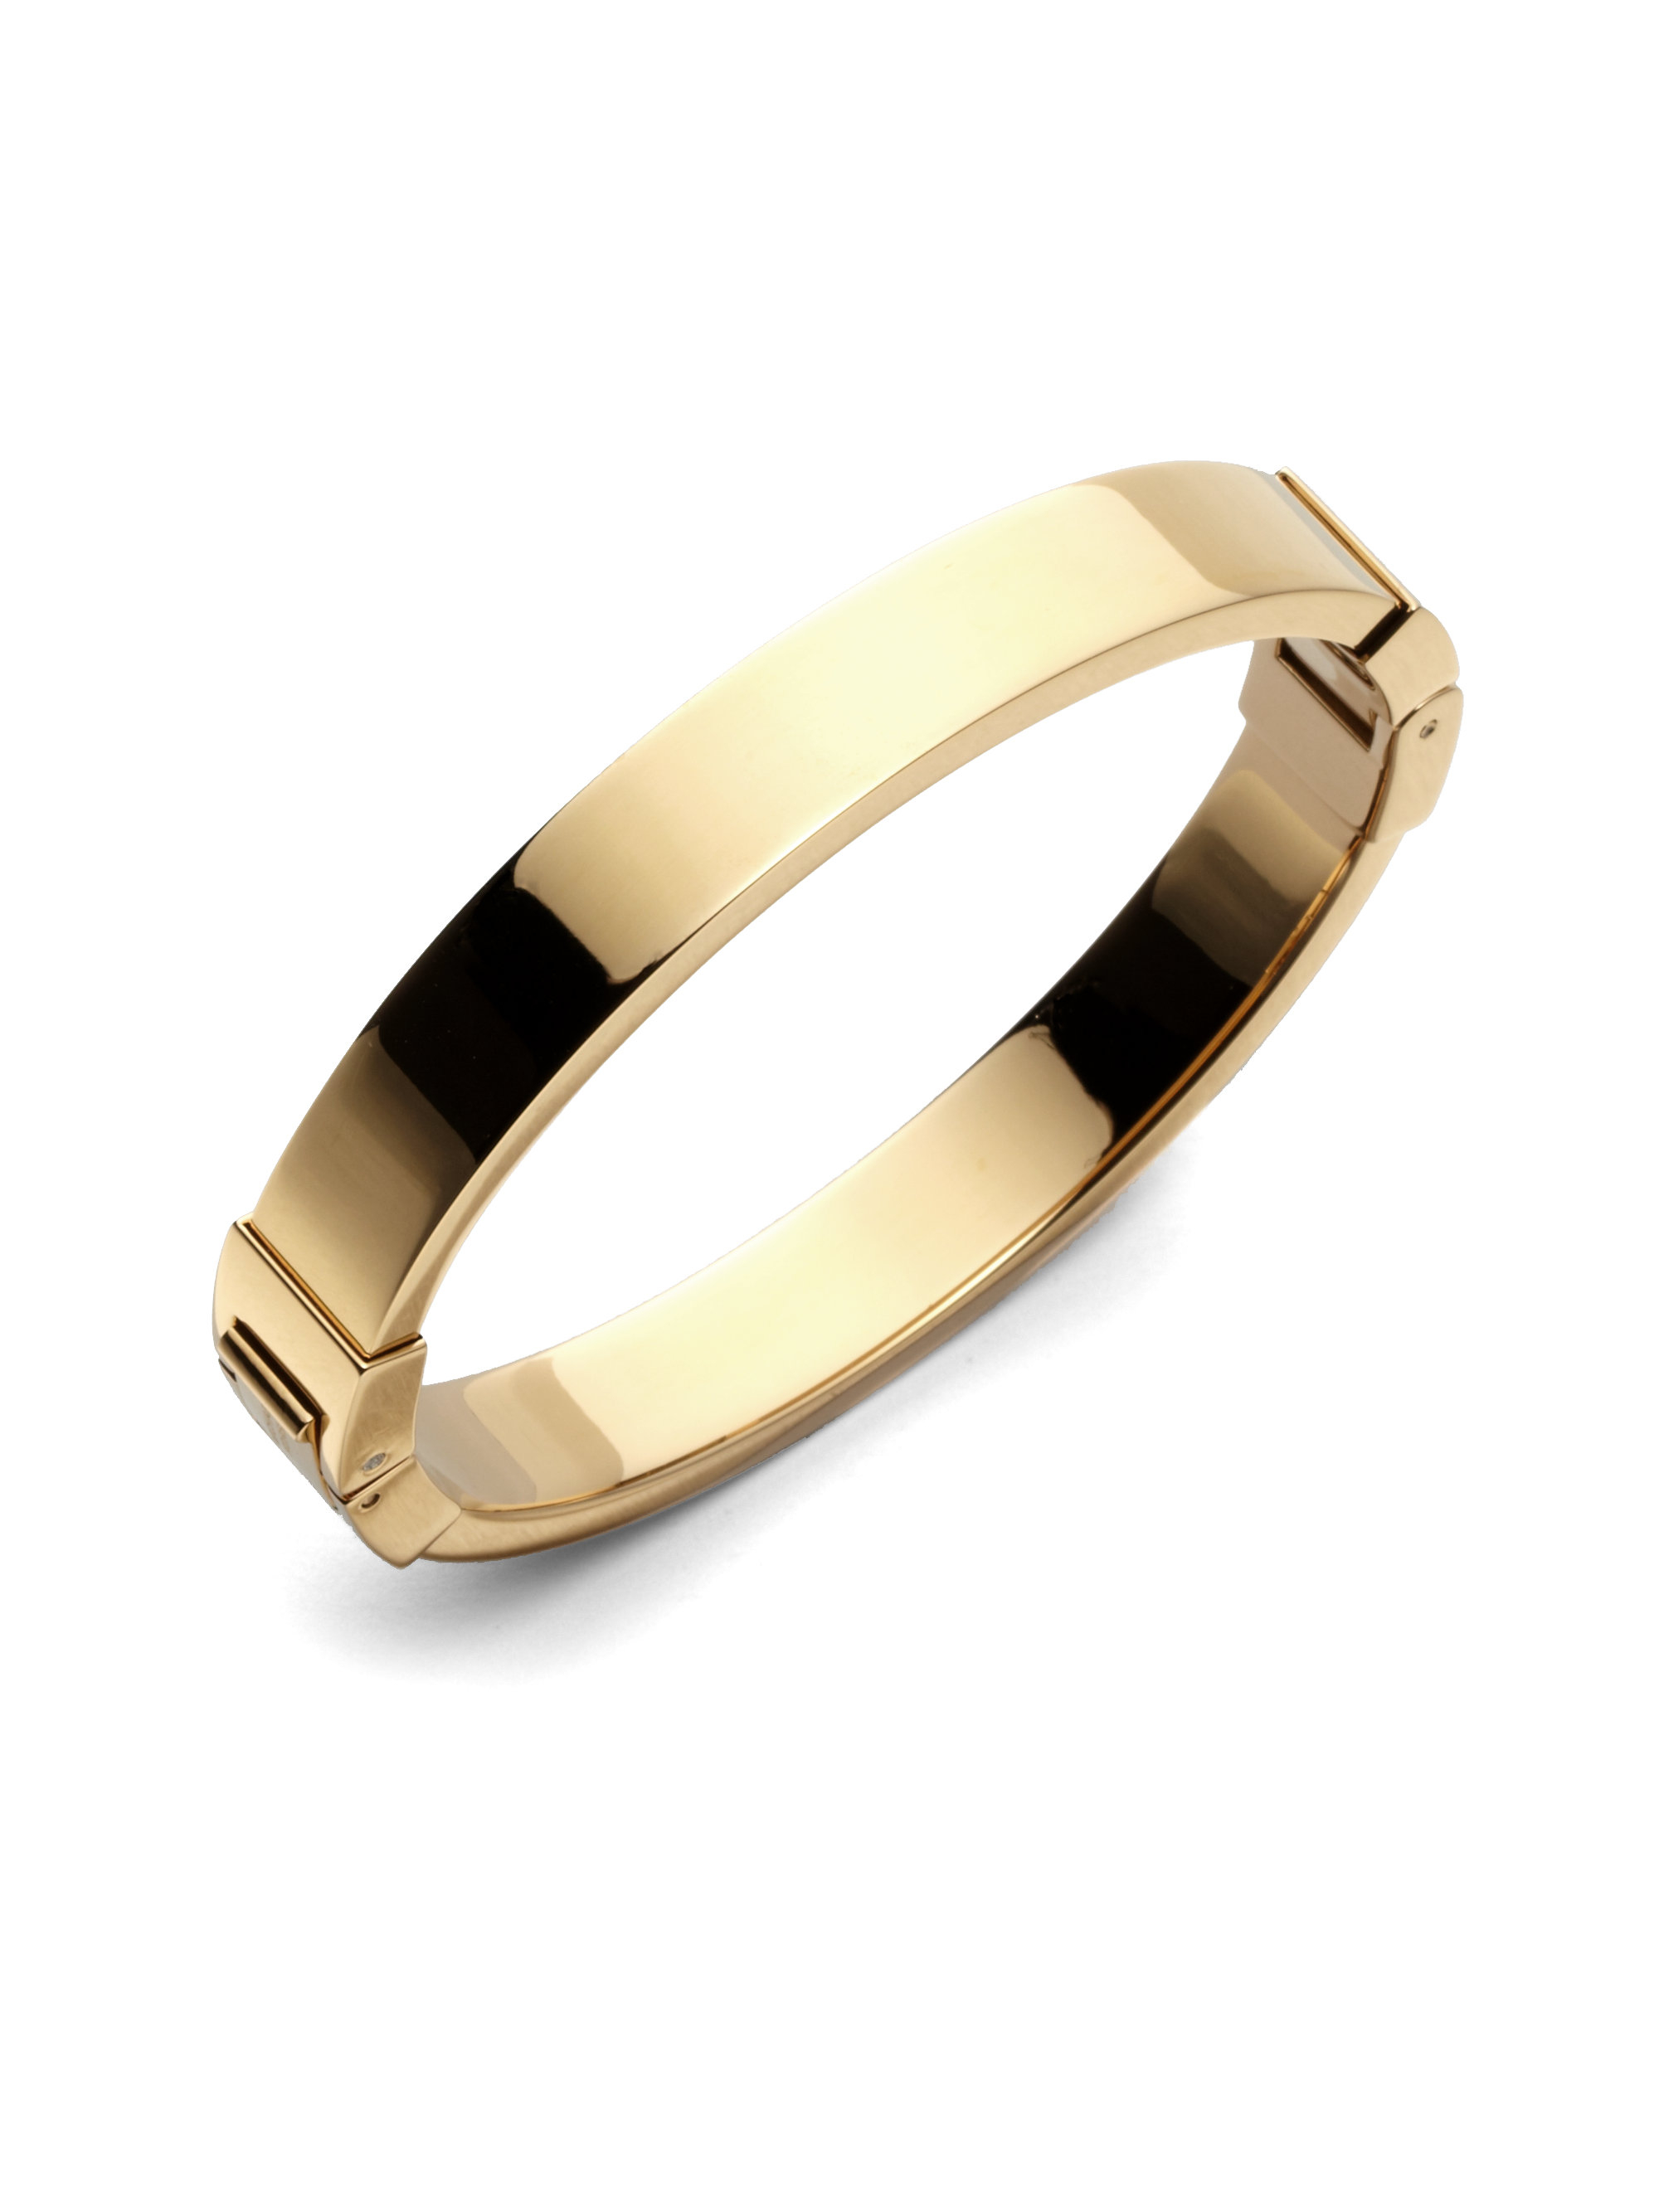 Michael Kors Goldtone Hinged Bangle Bracelet in Metallic - Lyst